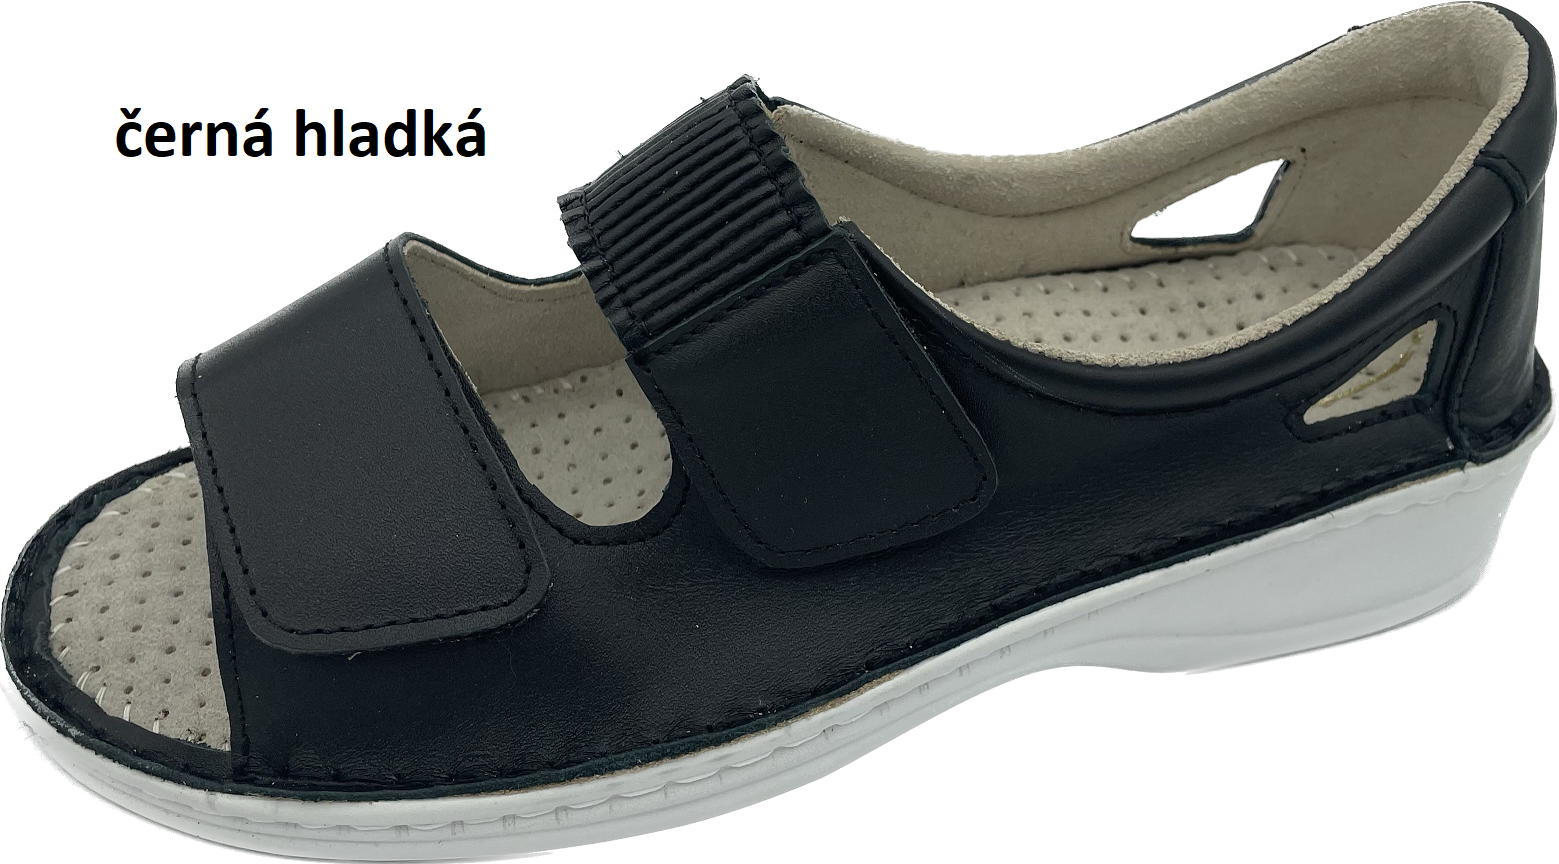 Boty Hanák vzor 306 - bílá podešev Barva usně: černá hladká, Velikosti obuvi: 35